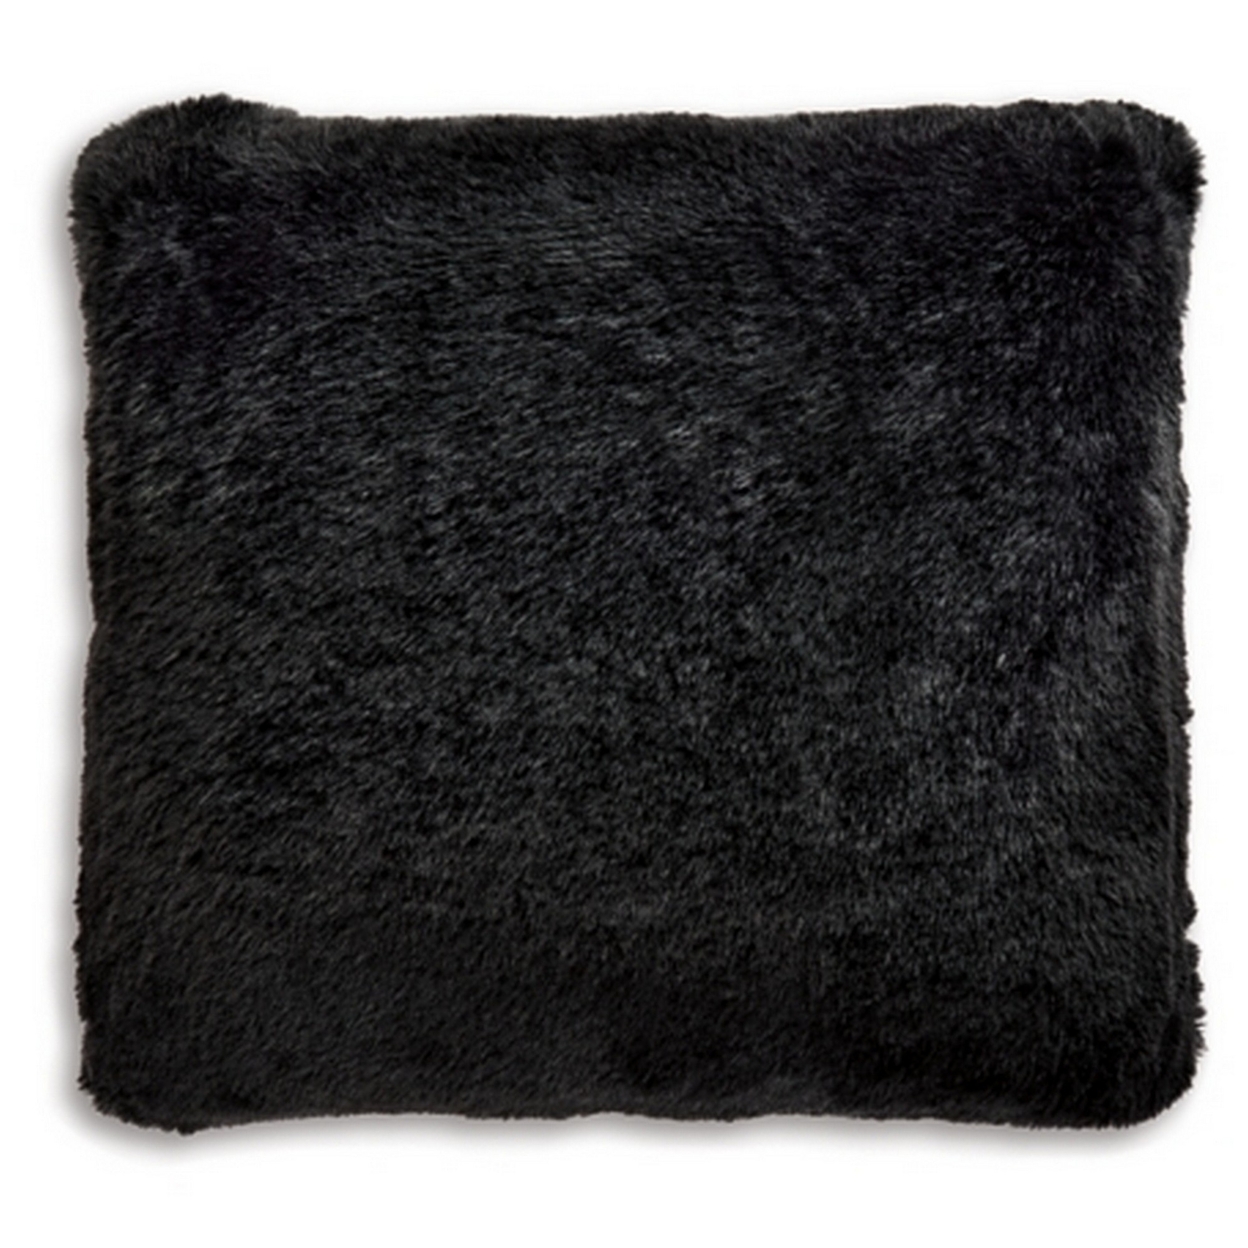 20 Inch Fluffy Accent Throw Pillow, Zipper, Soft Plush Black Faux Fur- Saltoro Sherpi